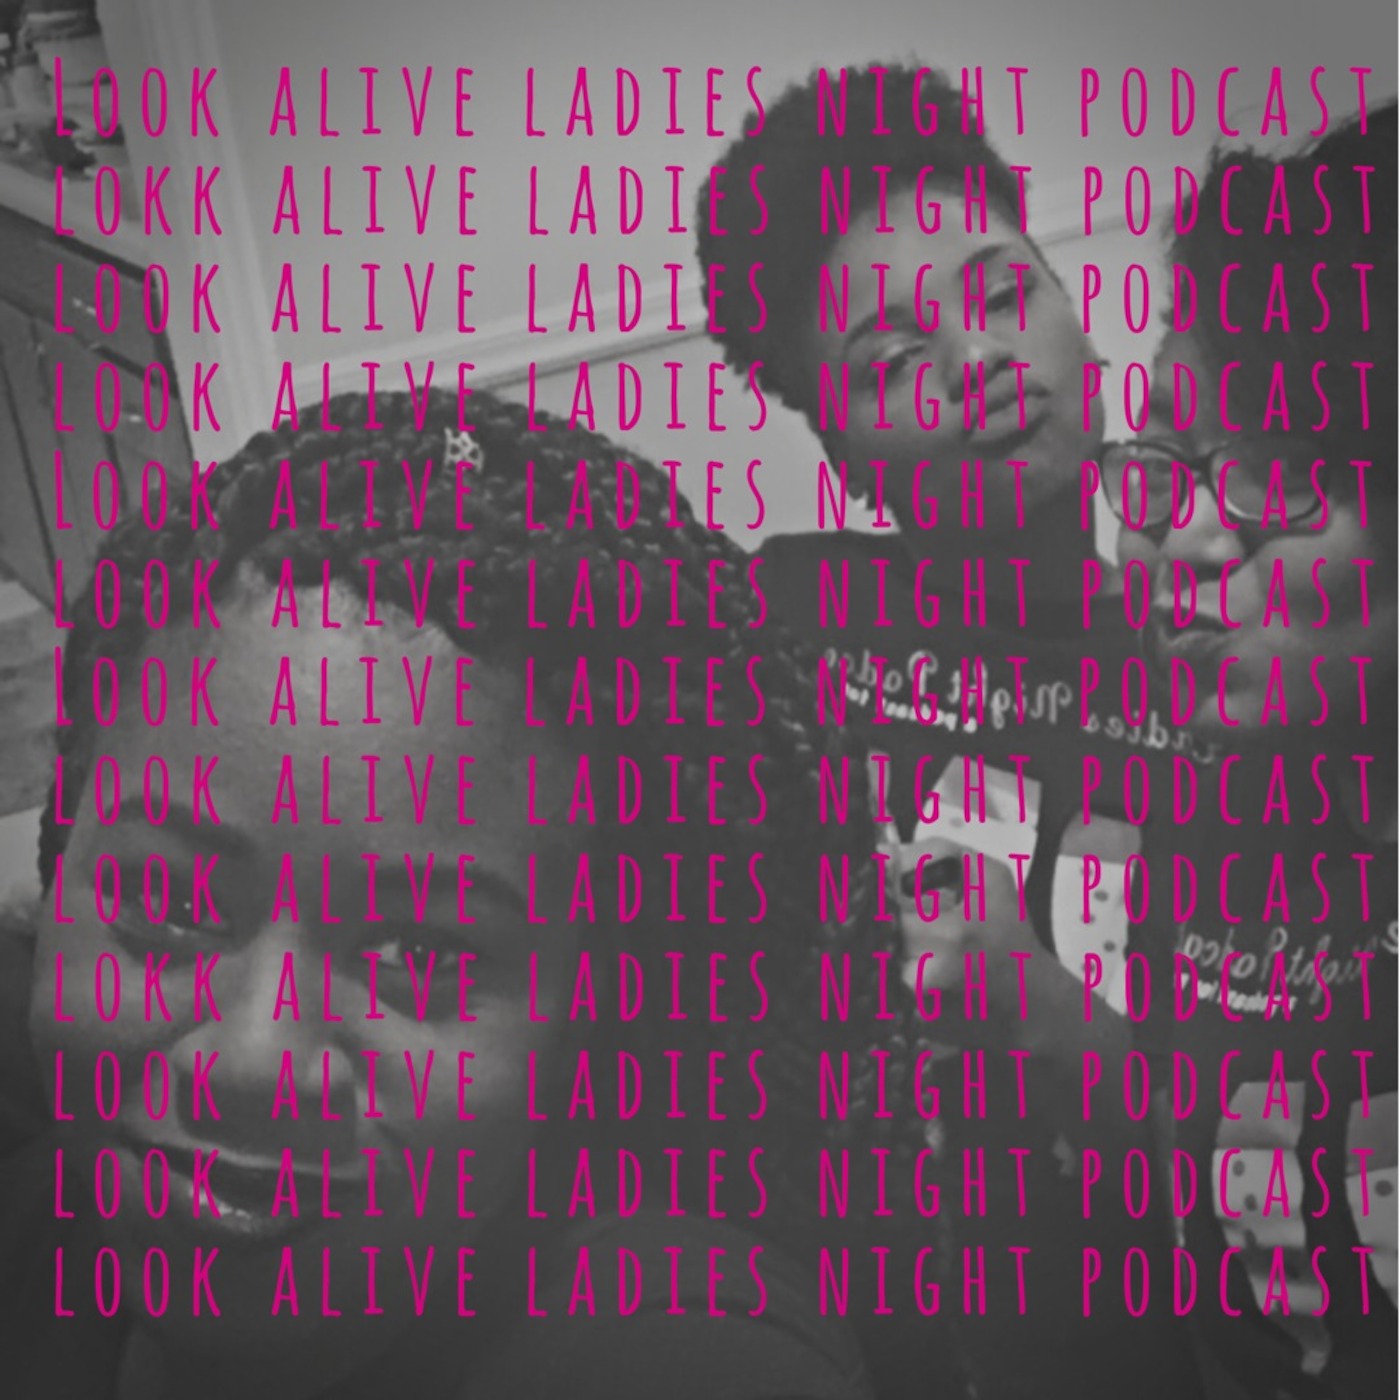 Look Alive: Ladies Night Podcast Freestyle